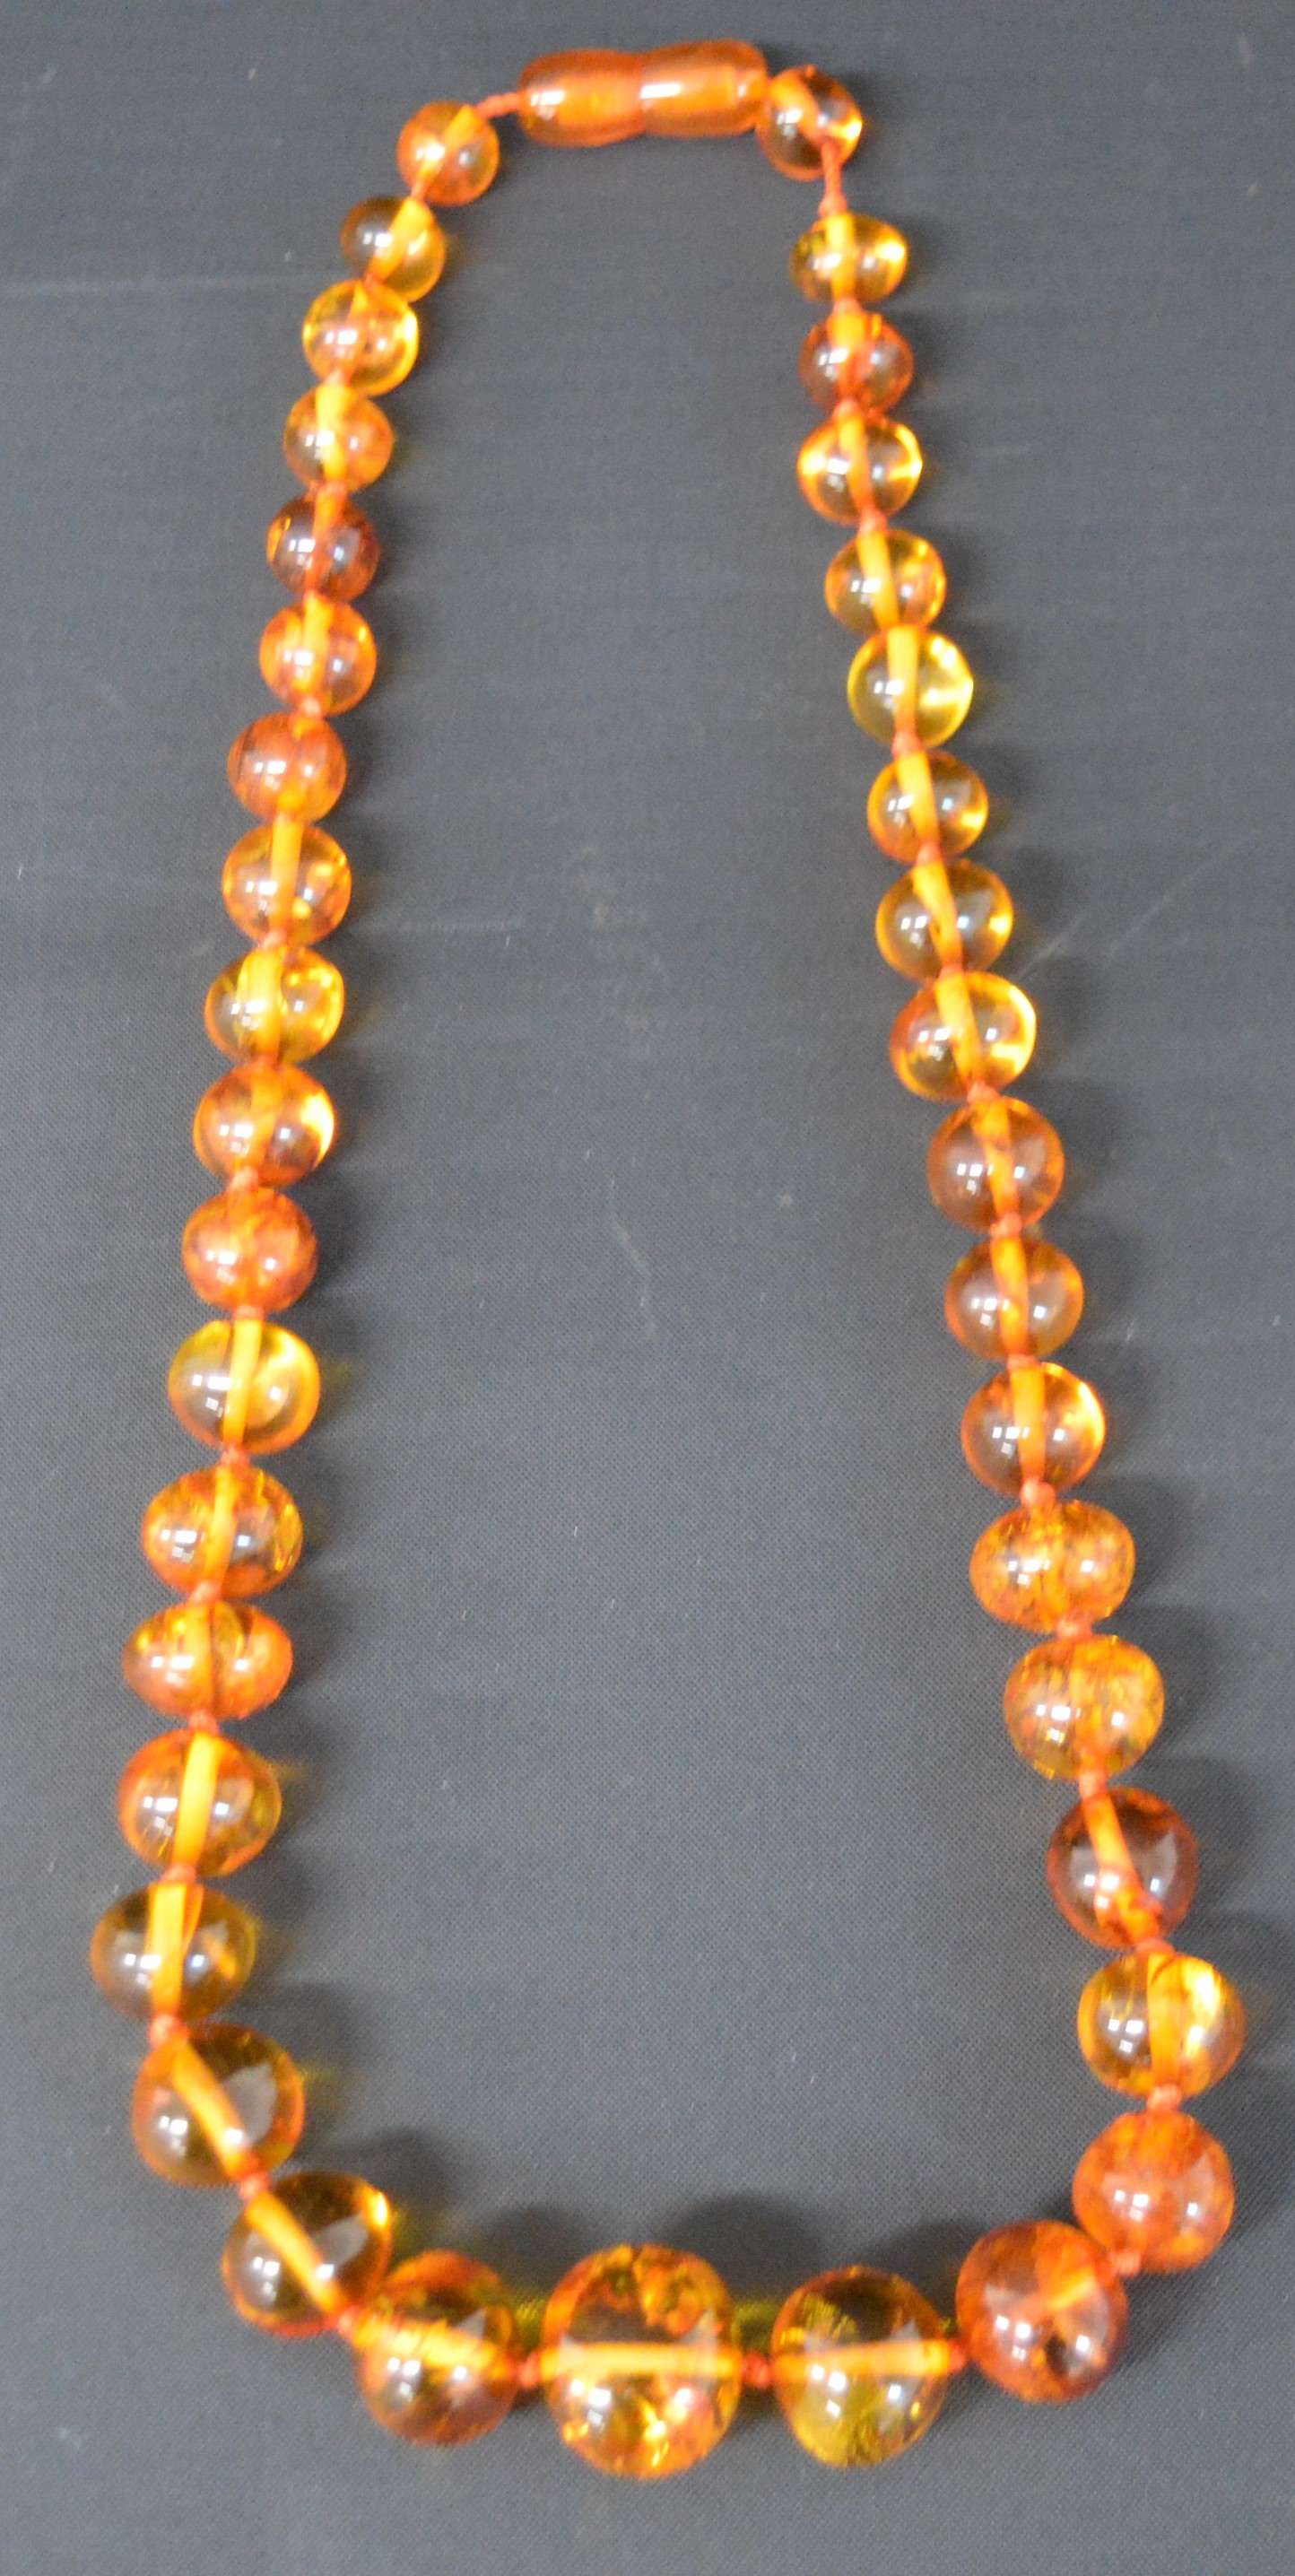 Amber bead necklace, 24cm drop